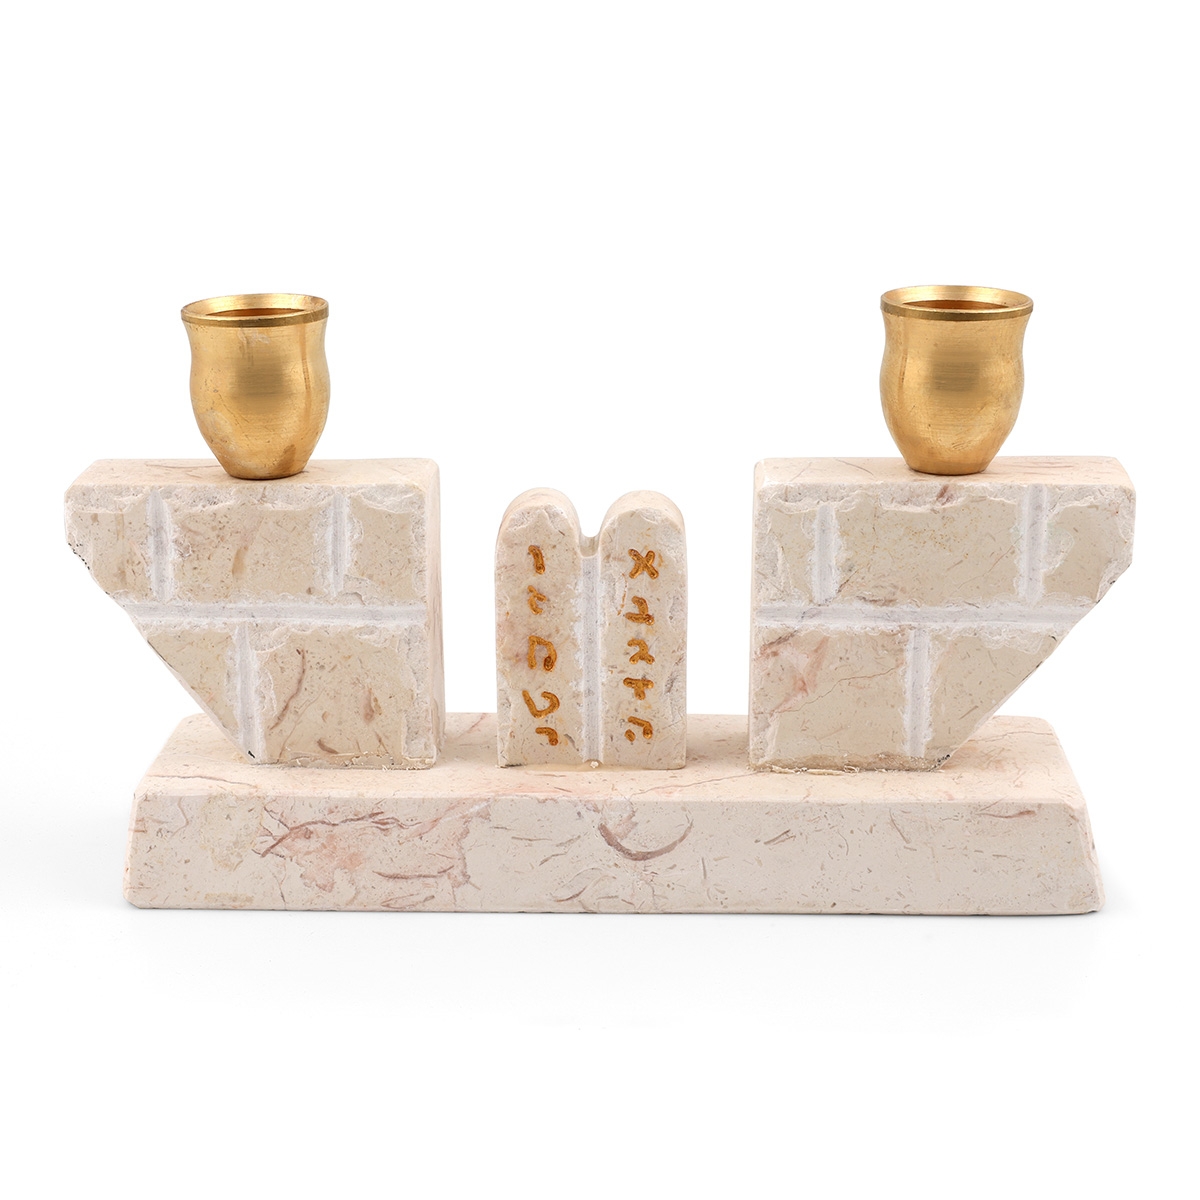 Jerusalem Stone Ten Commandments Candlesticks - 1